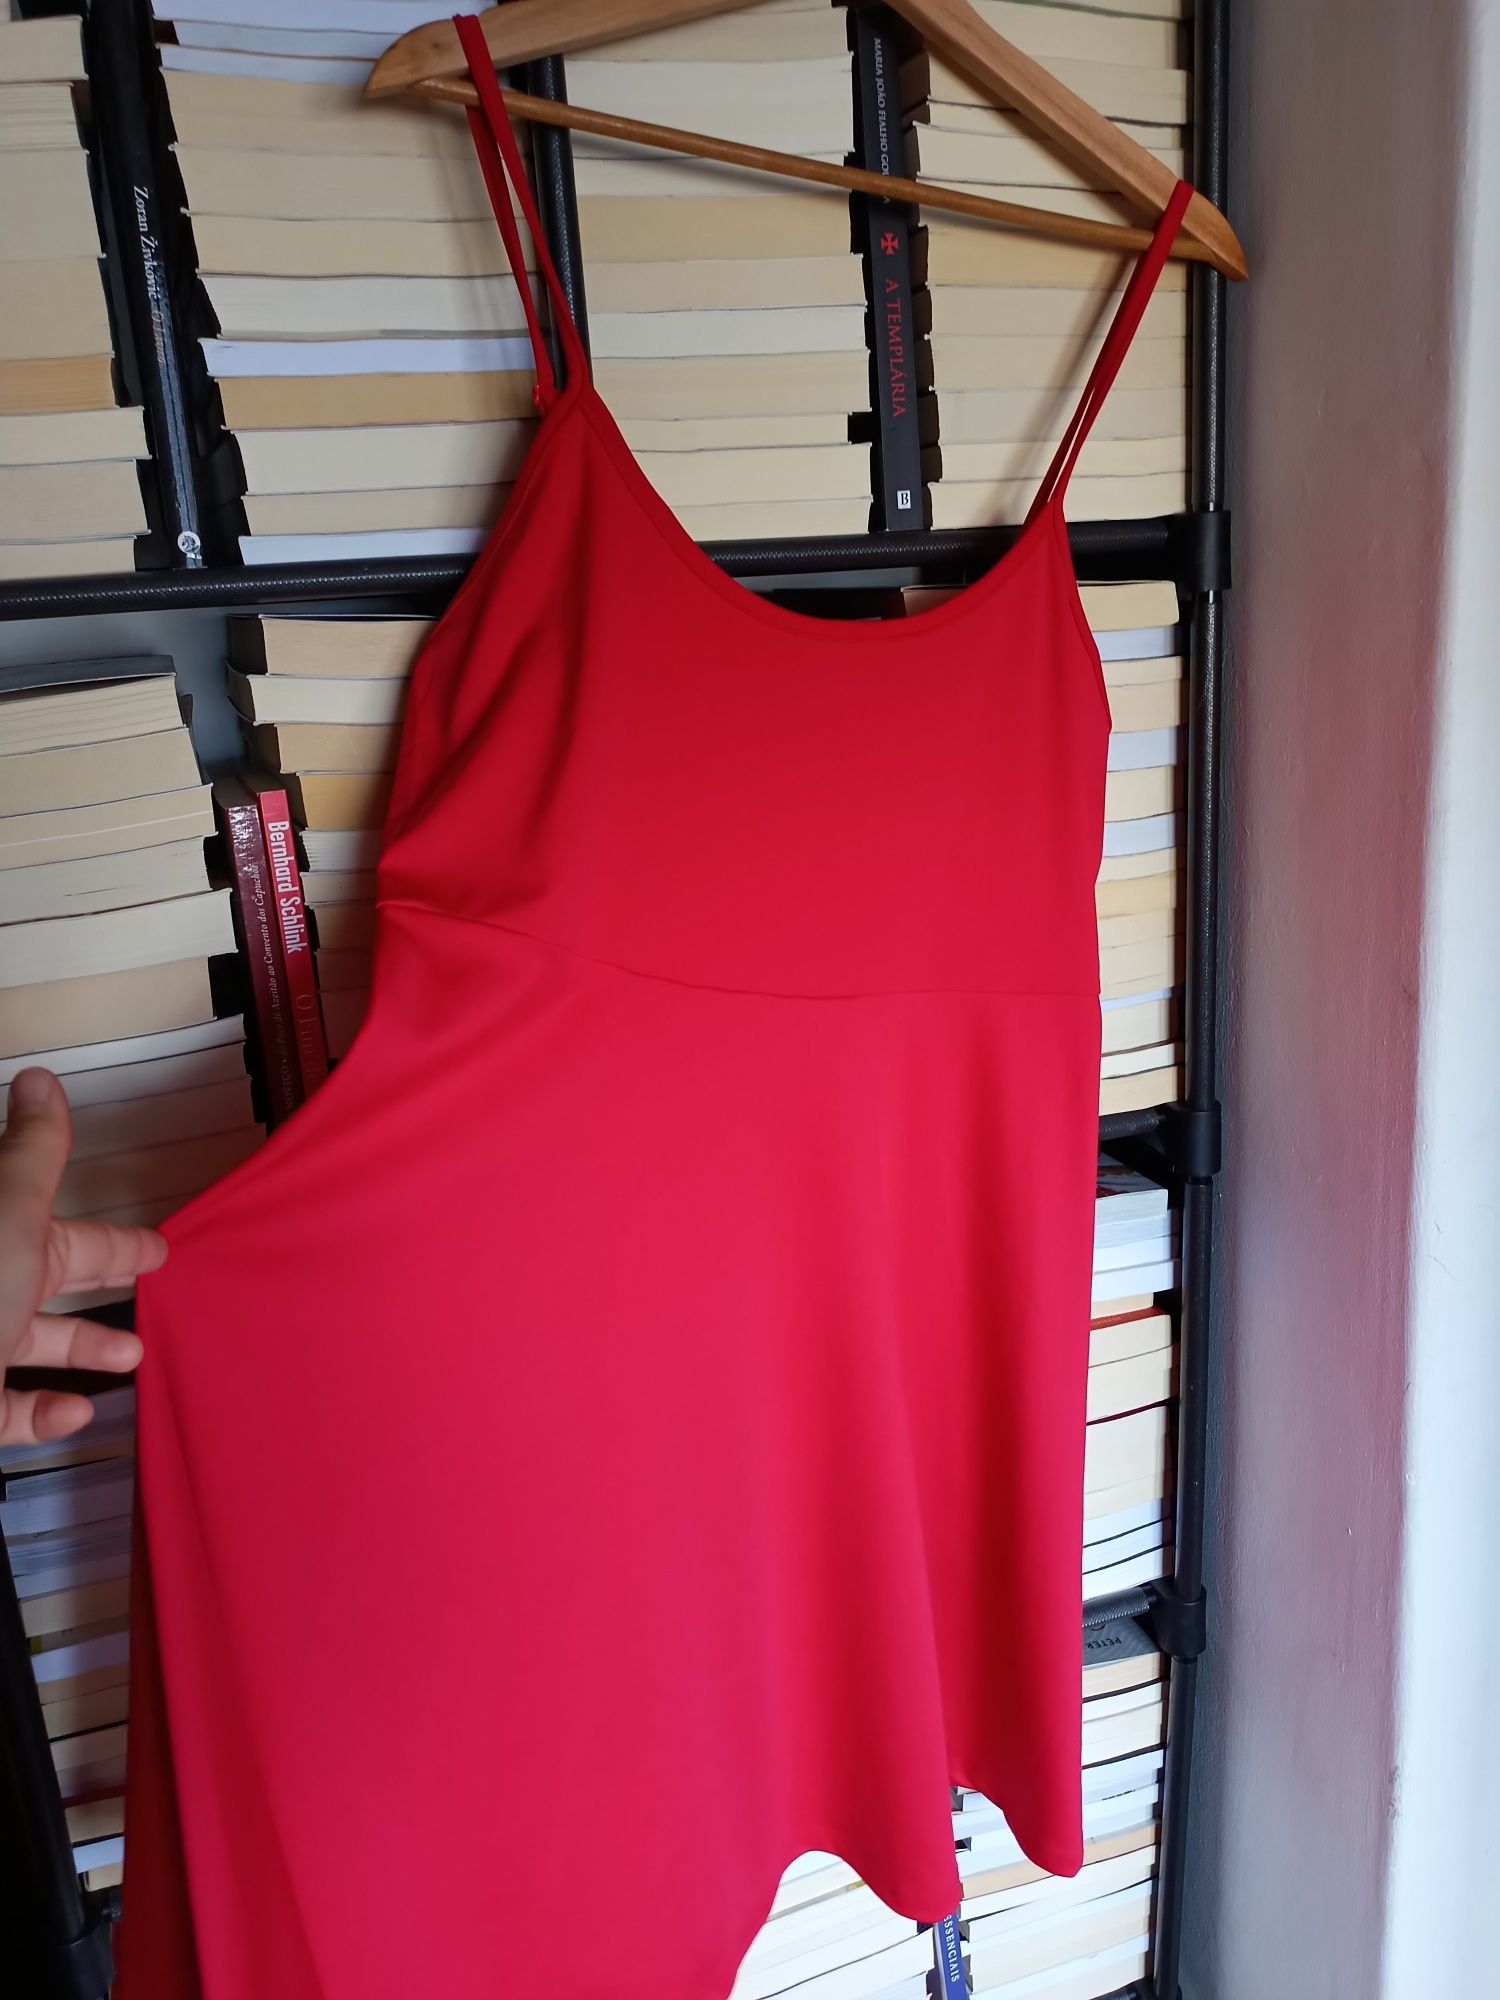 Vestido vermelho